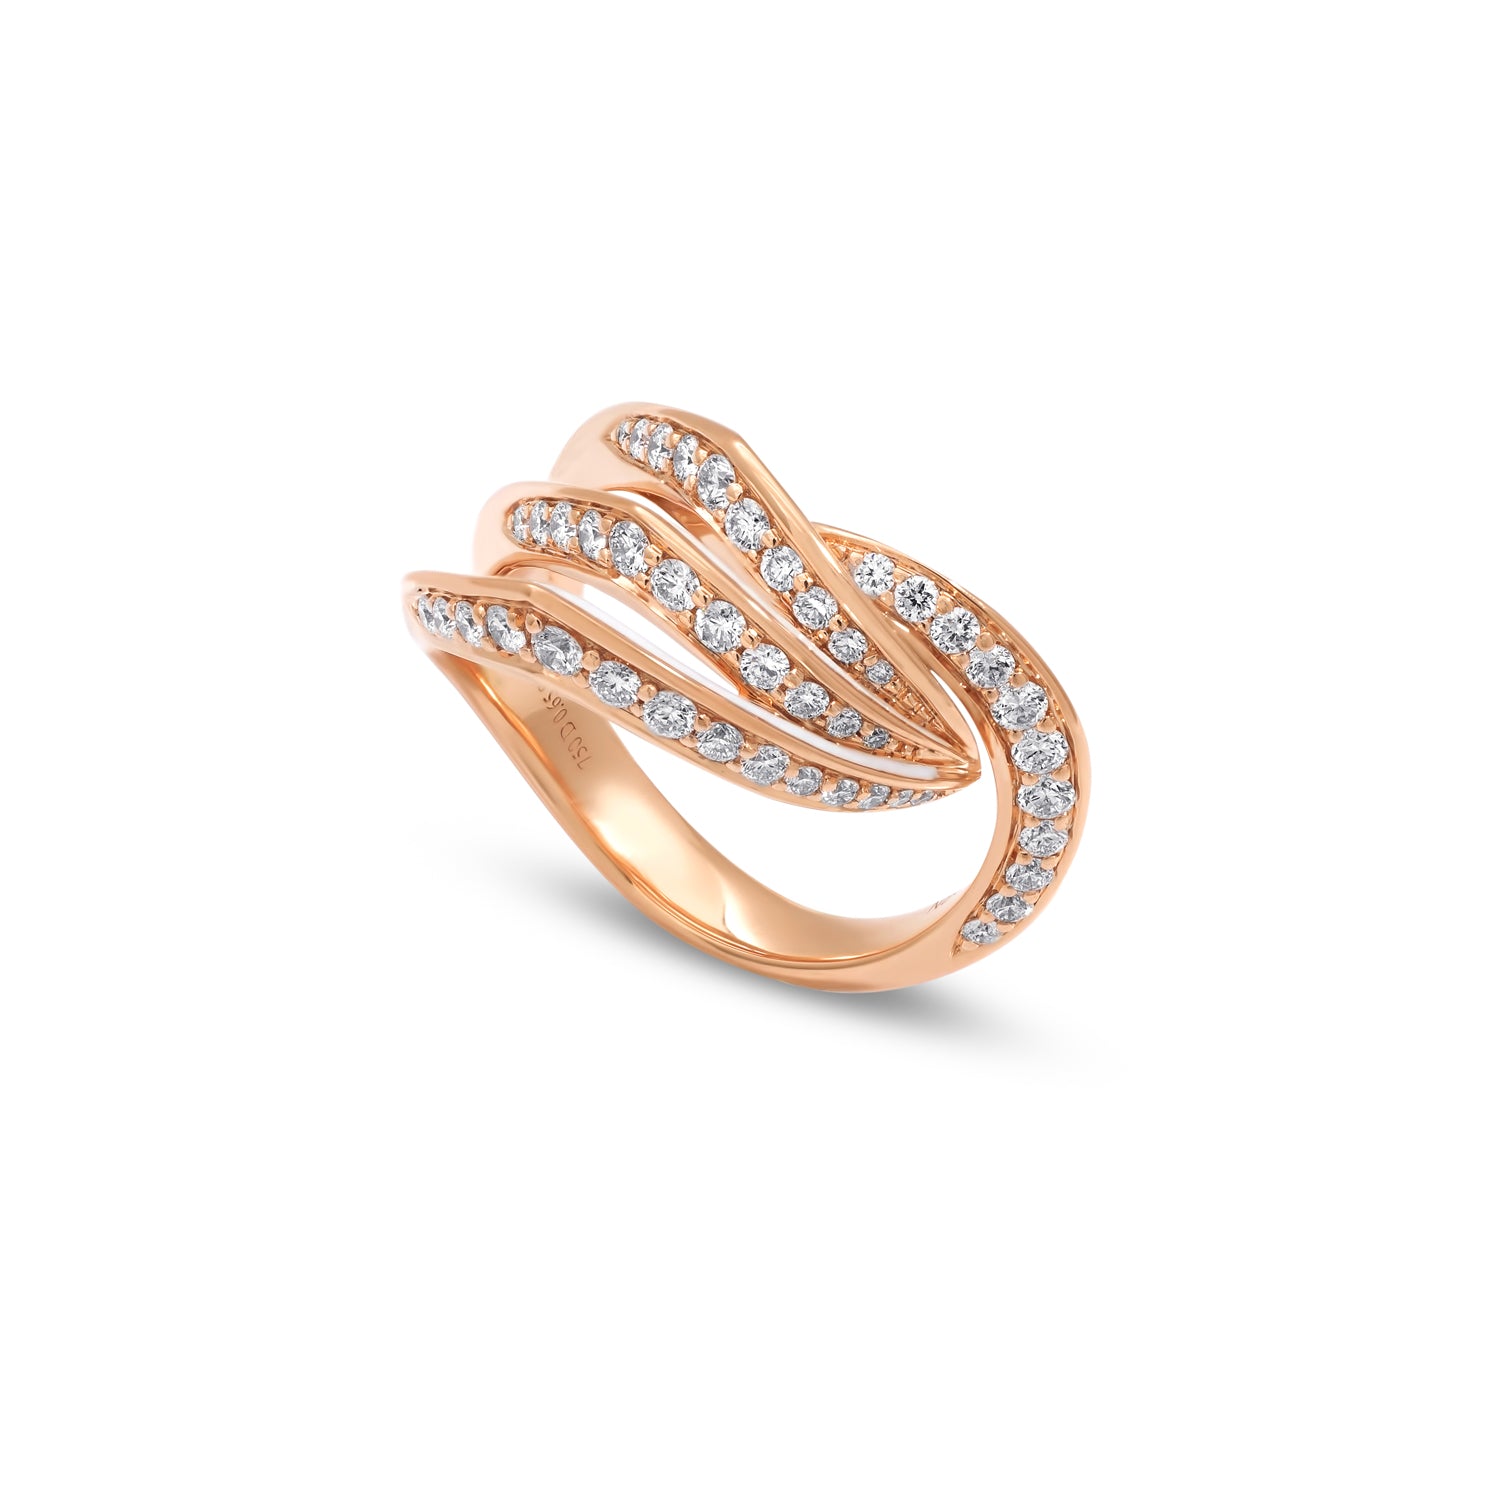 VIVA Ring with Diamonds and White Enamel